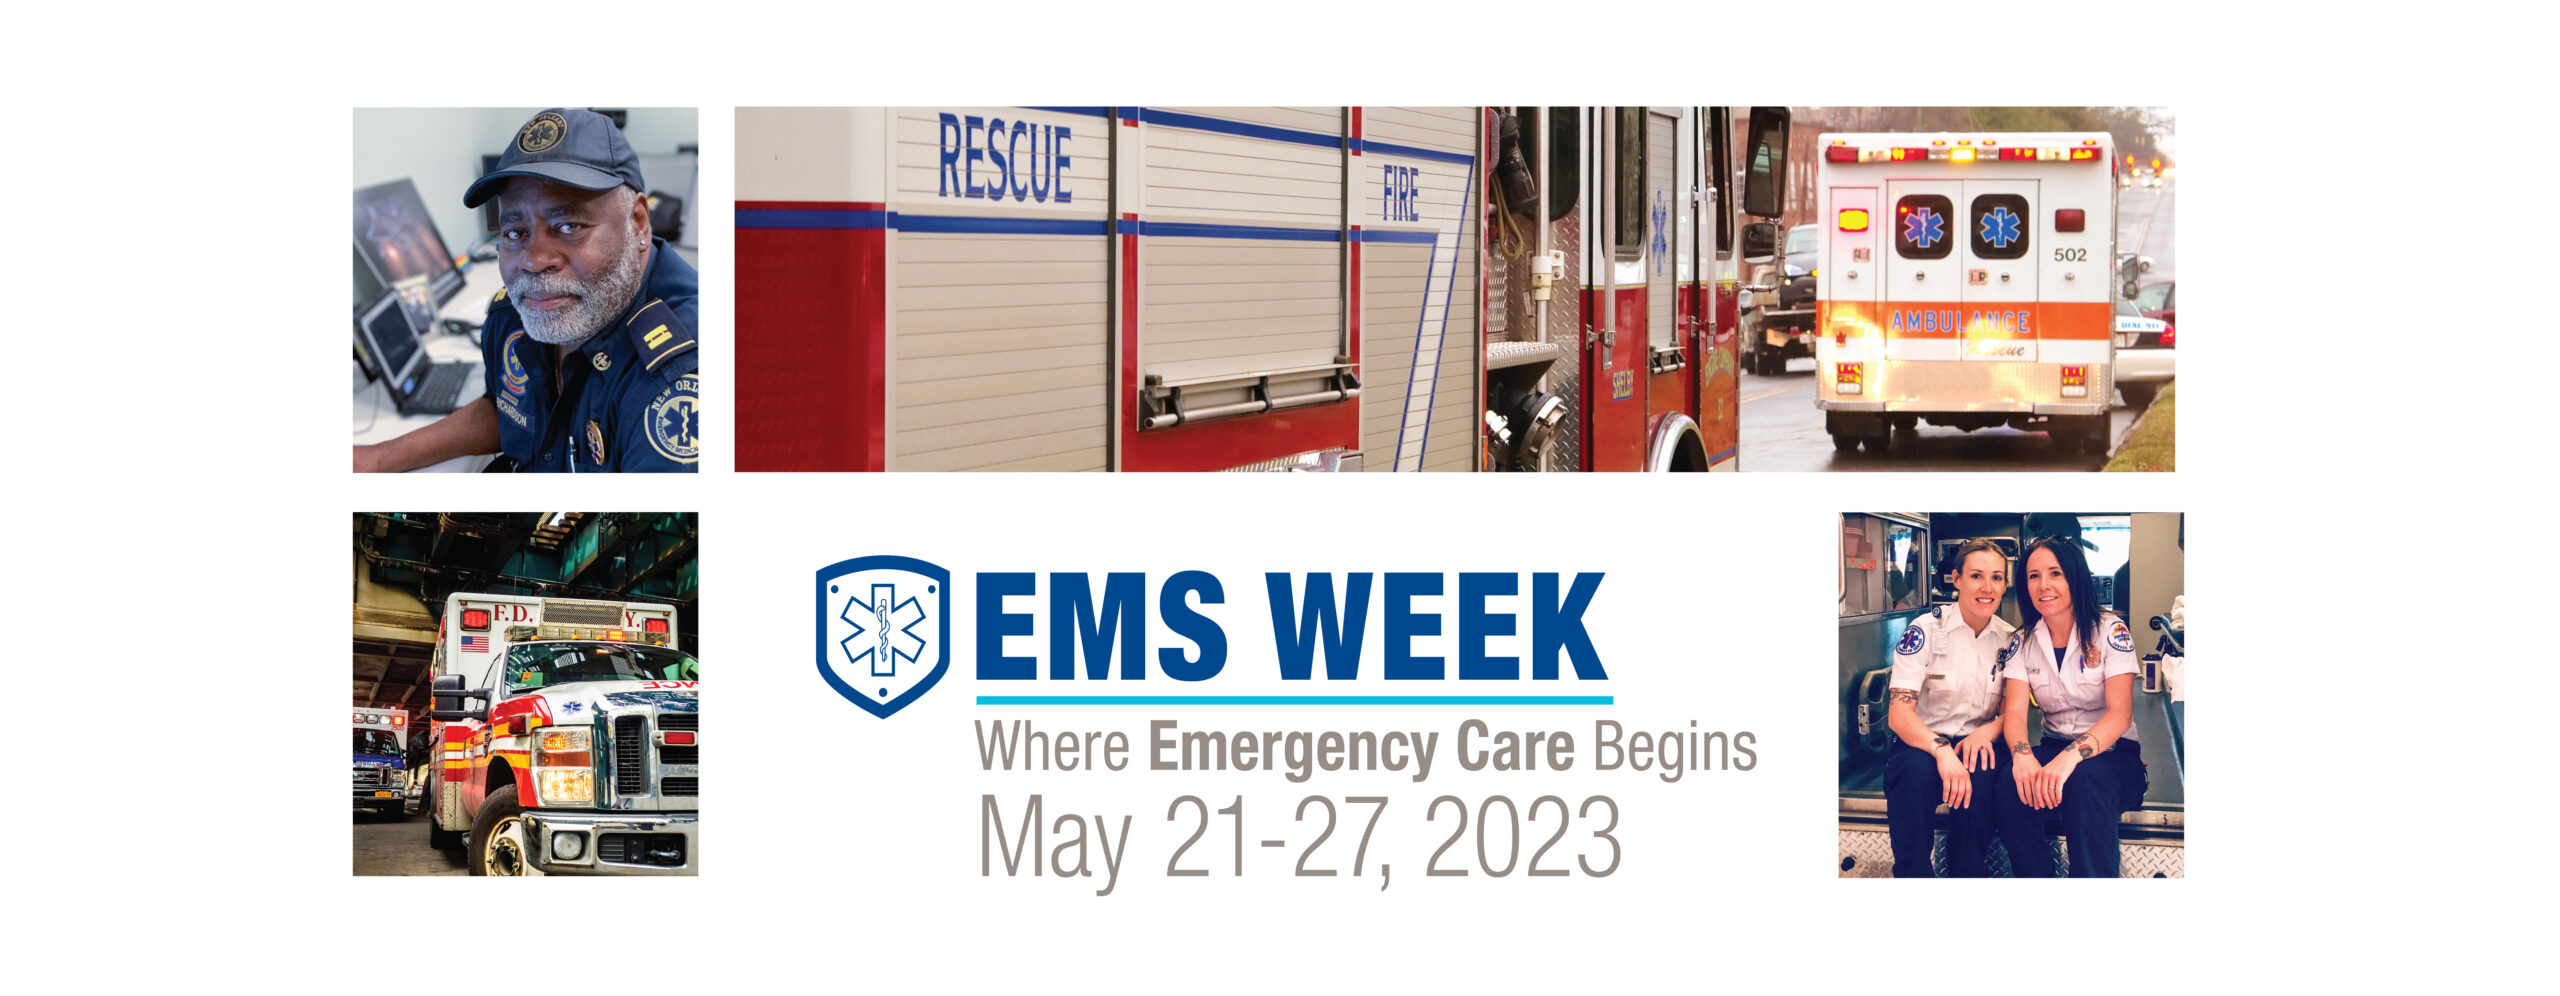 EMS Week 2023 Where Emergency Care Begins May 2127, 2023